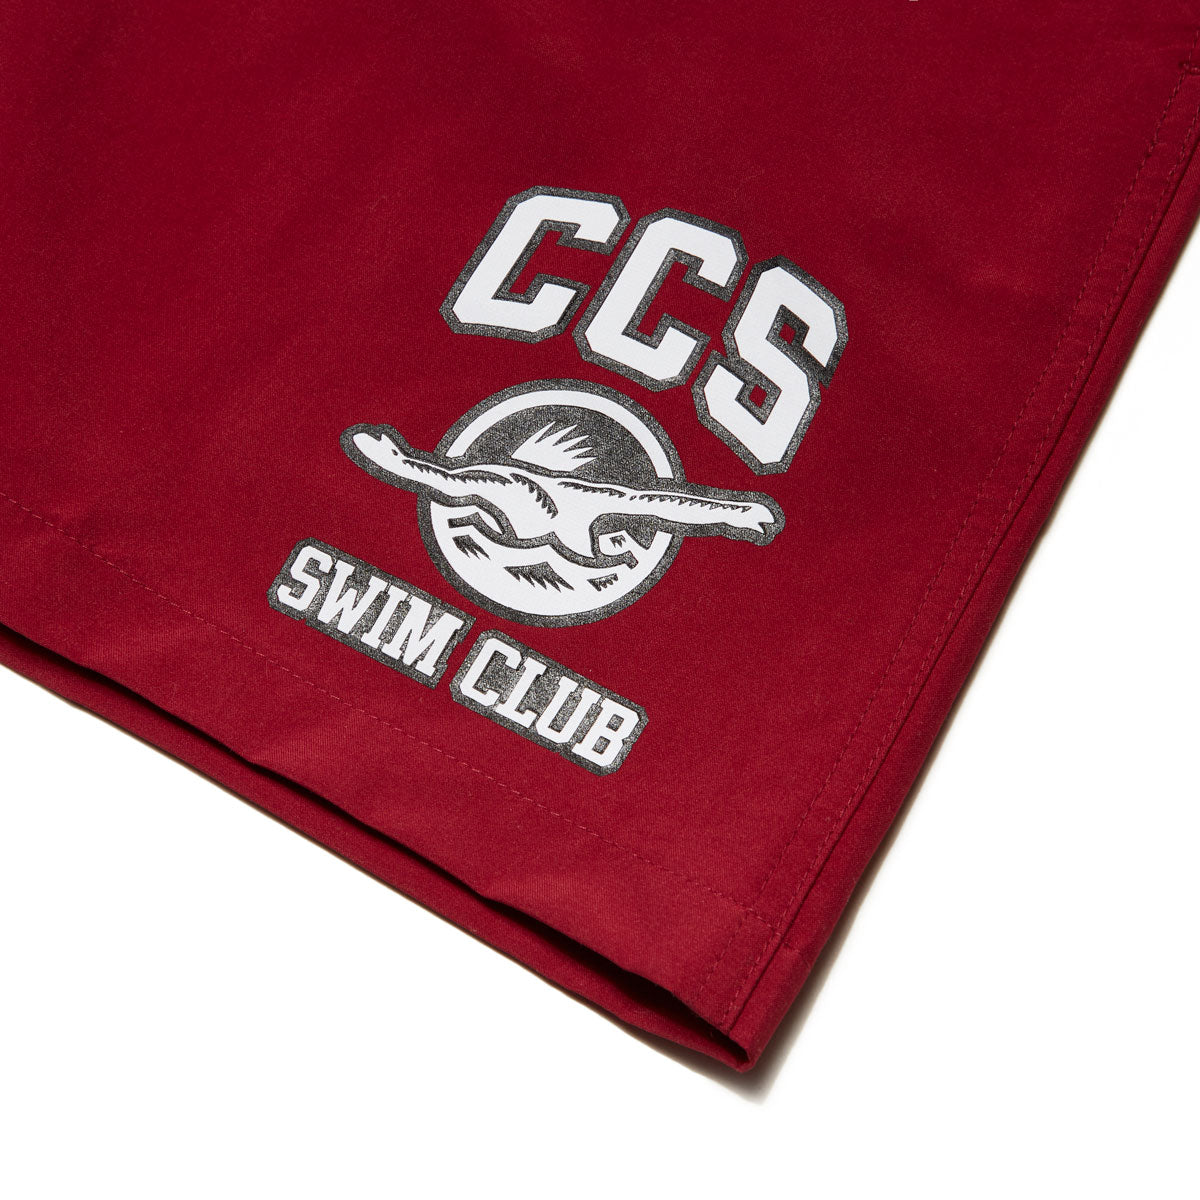 CCS Swim Club Hybrid Shorts - Maroon image 2